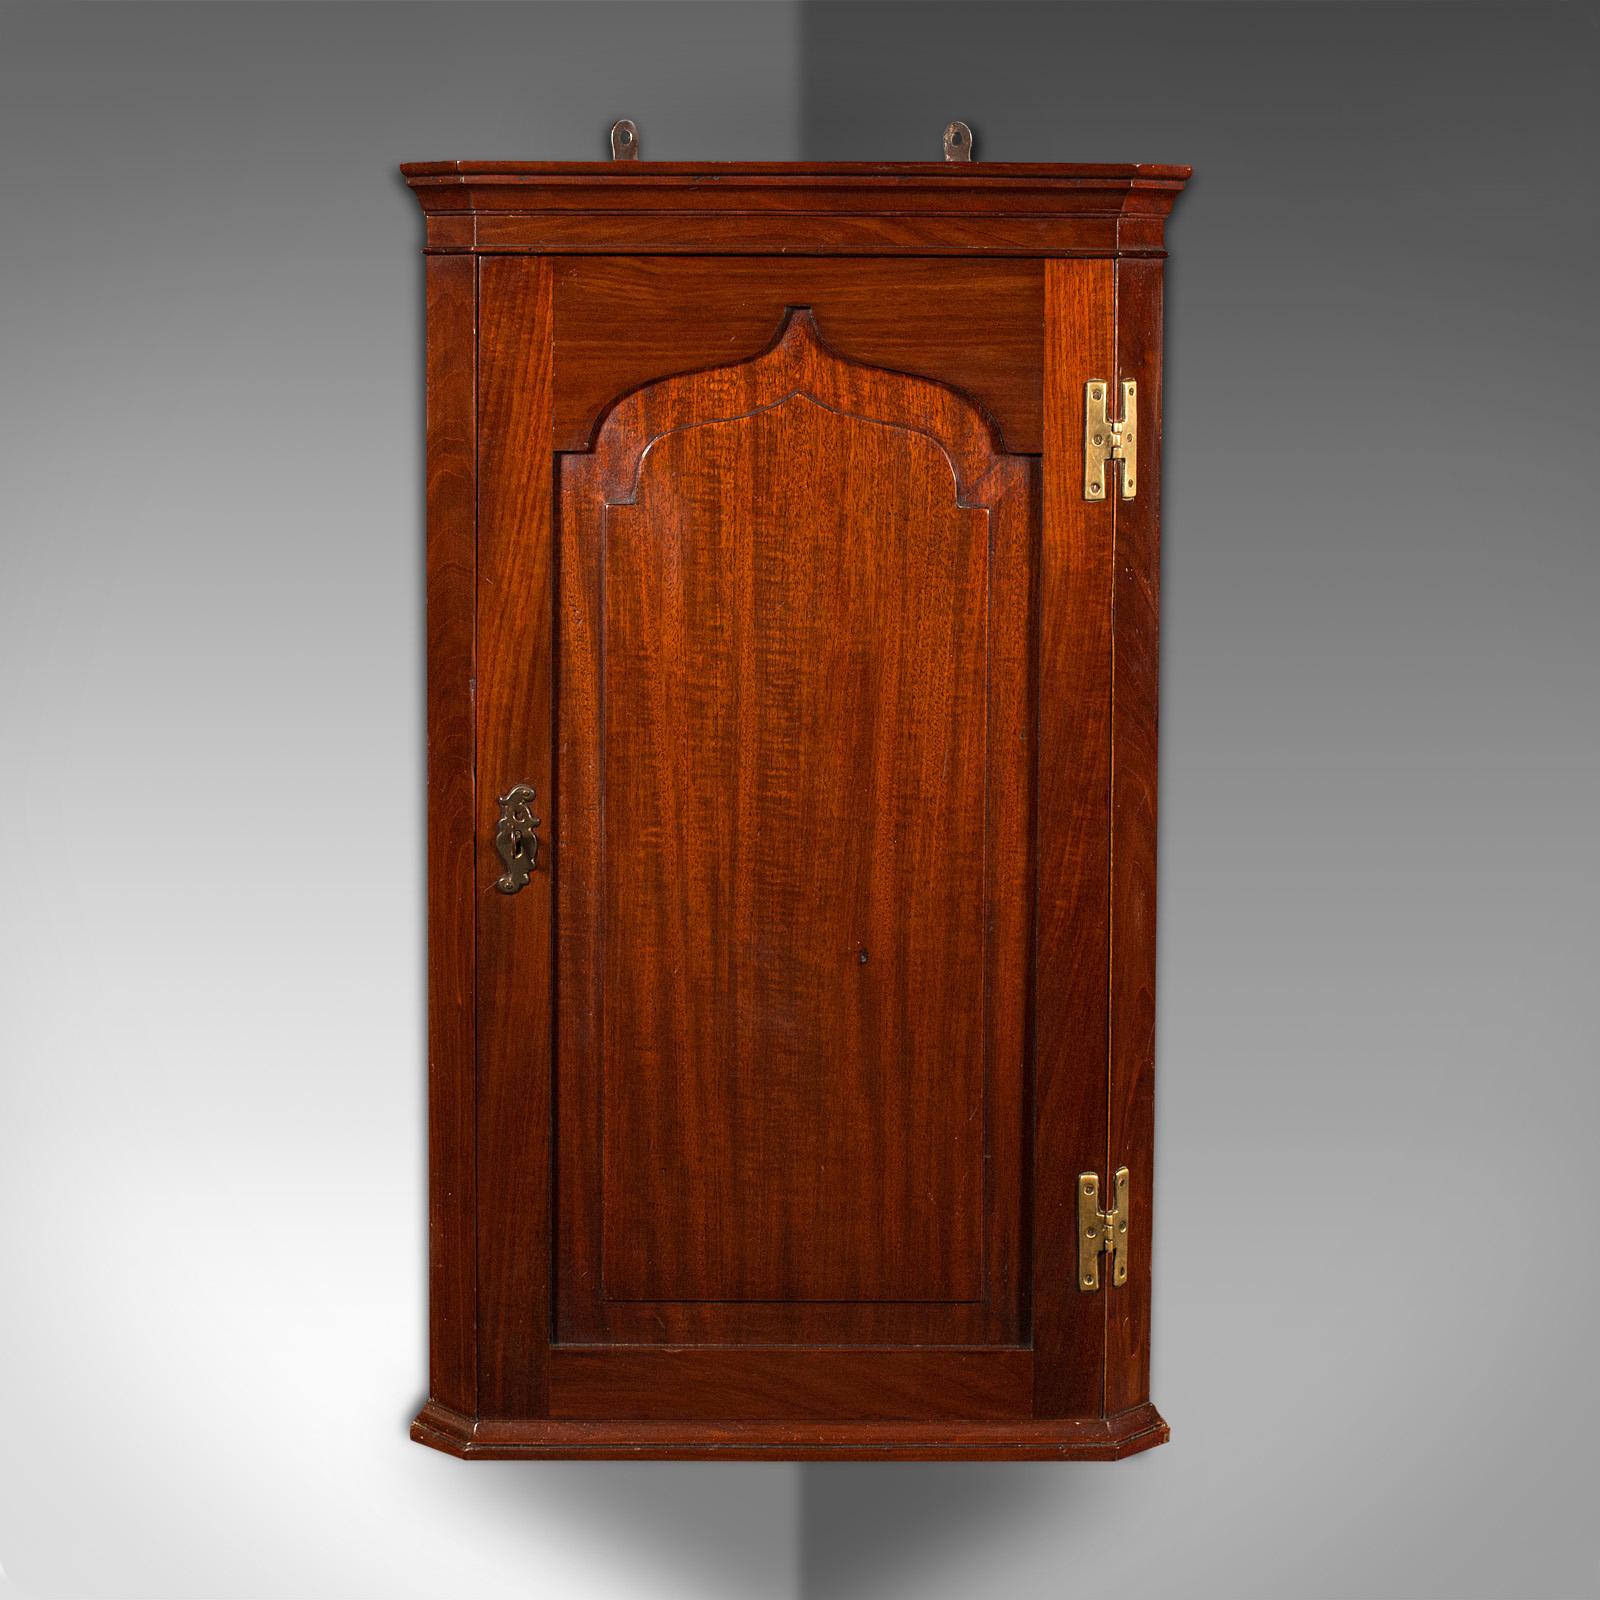 British Antique Corner Cabinet, English, Cupboard, Georgian Revival, Victorian, C.1880 For Sale